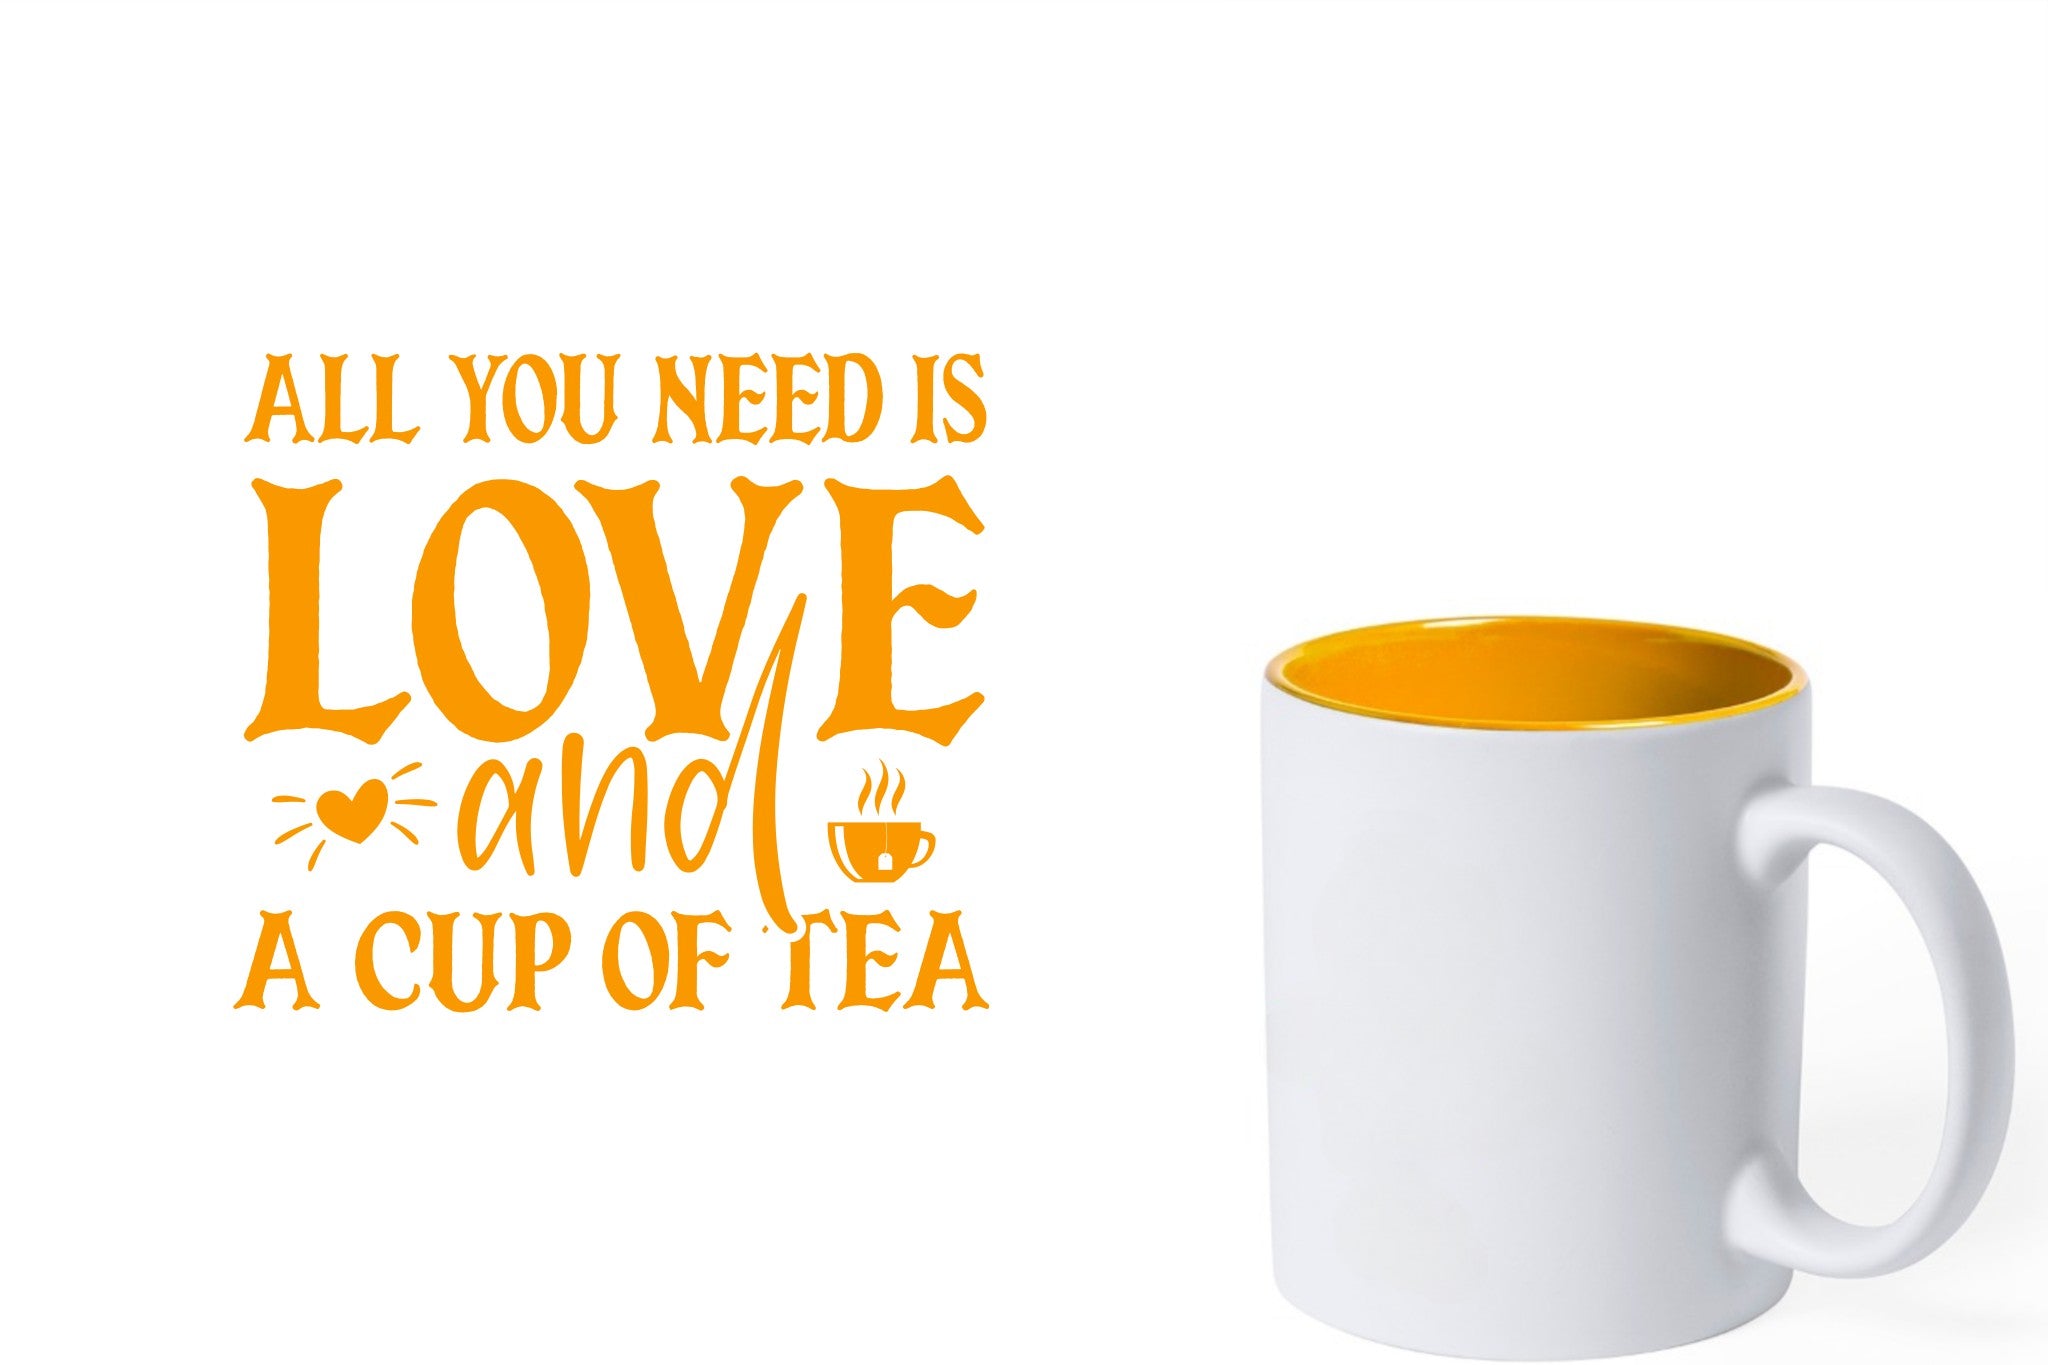 witte keramische mok met gele gravure  'All you need is love and a cup of tea'.